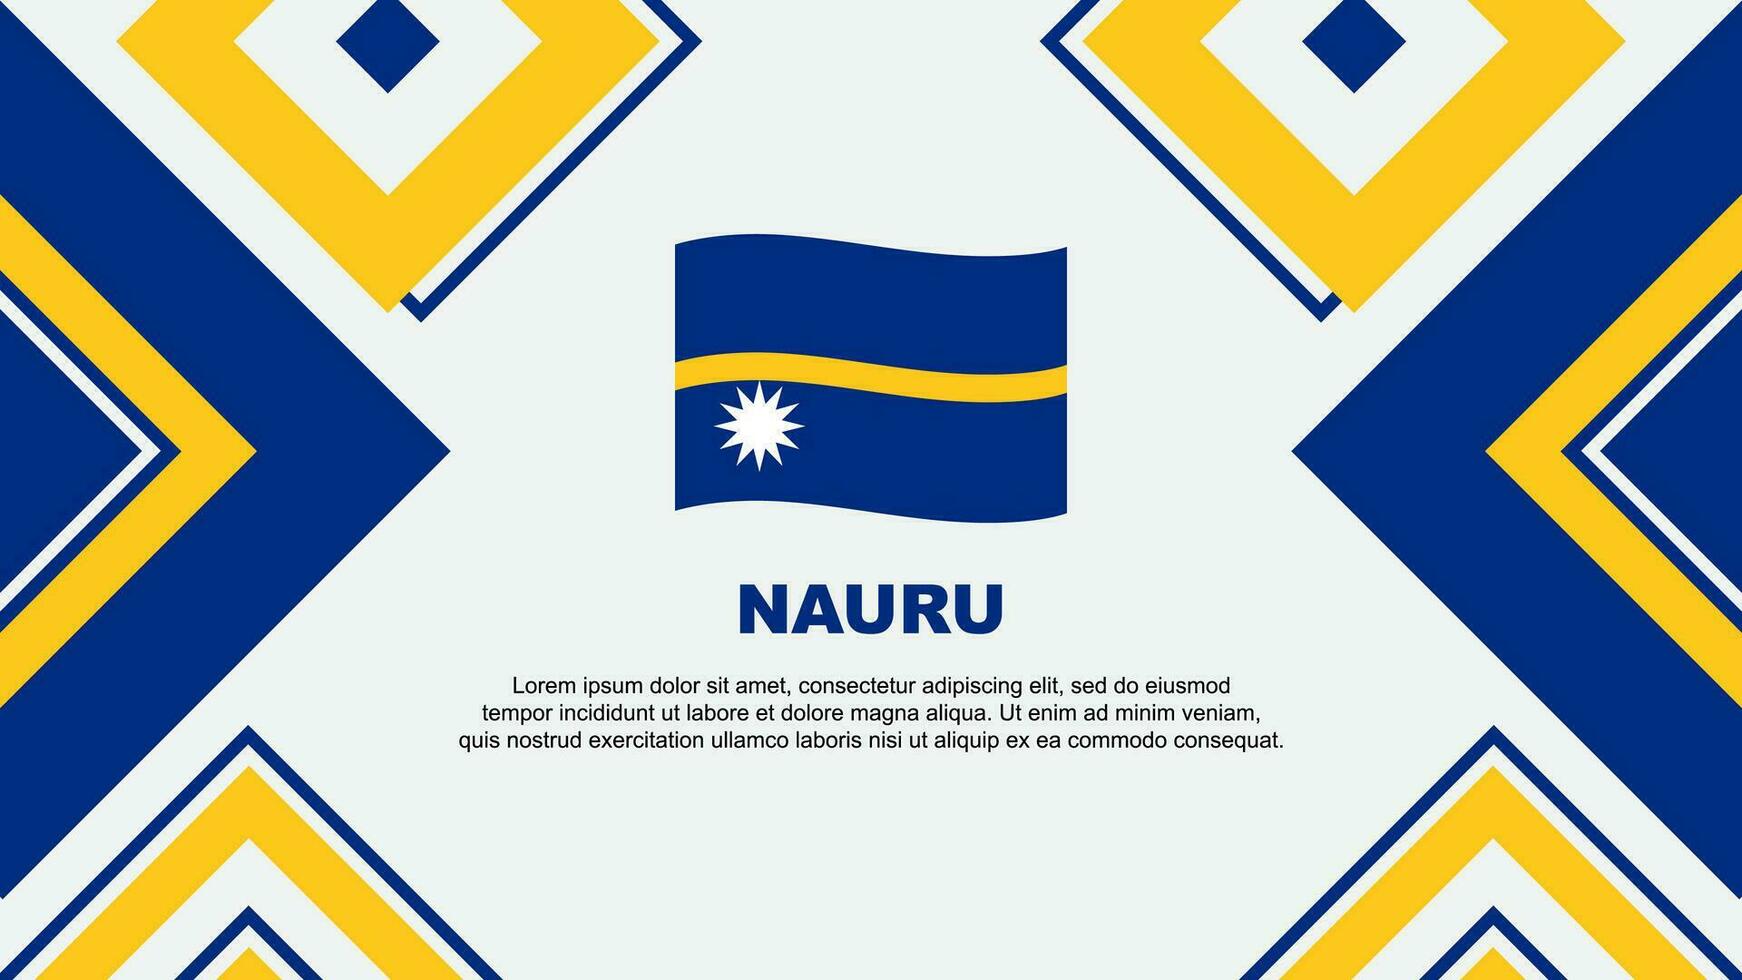 Nauru Flag Abstract Background Design Template. Nauru Independence Day Banner Wallpaper Vector Illustration. Nauru Independence Day